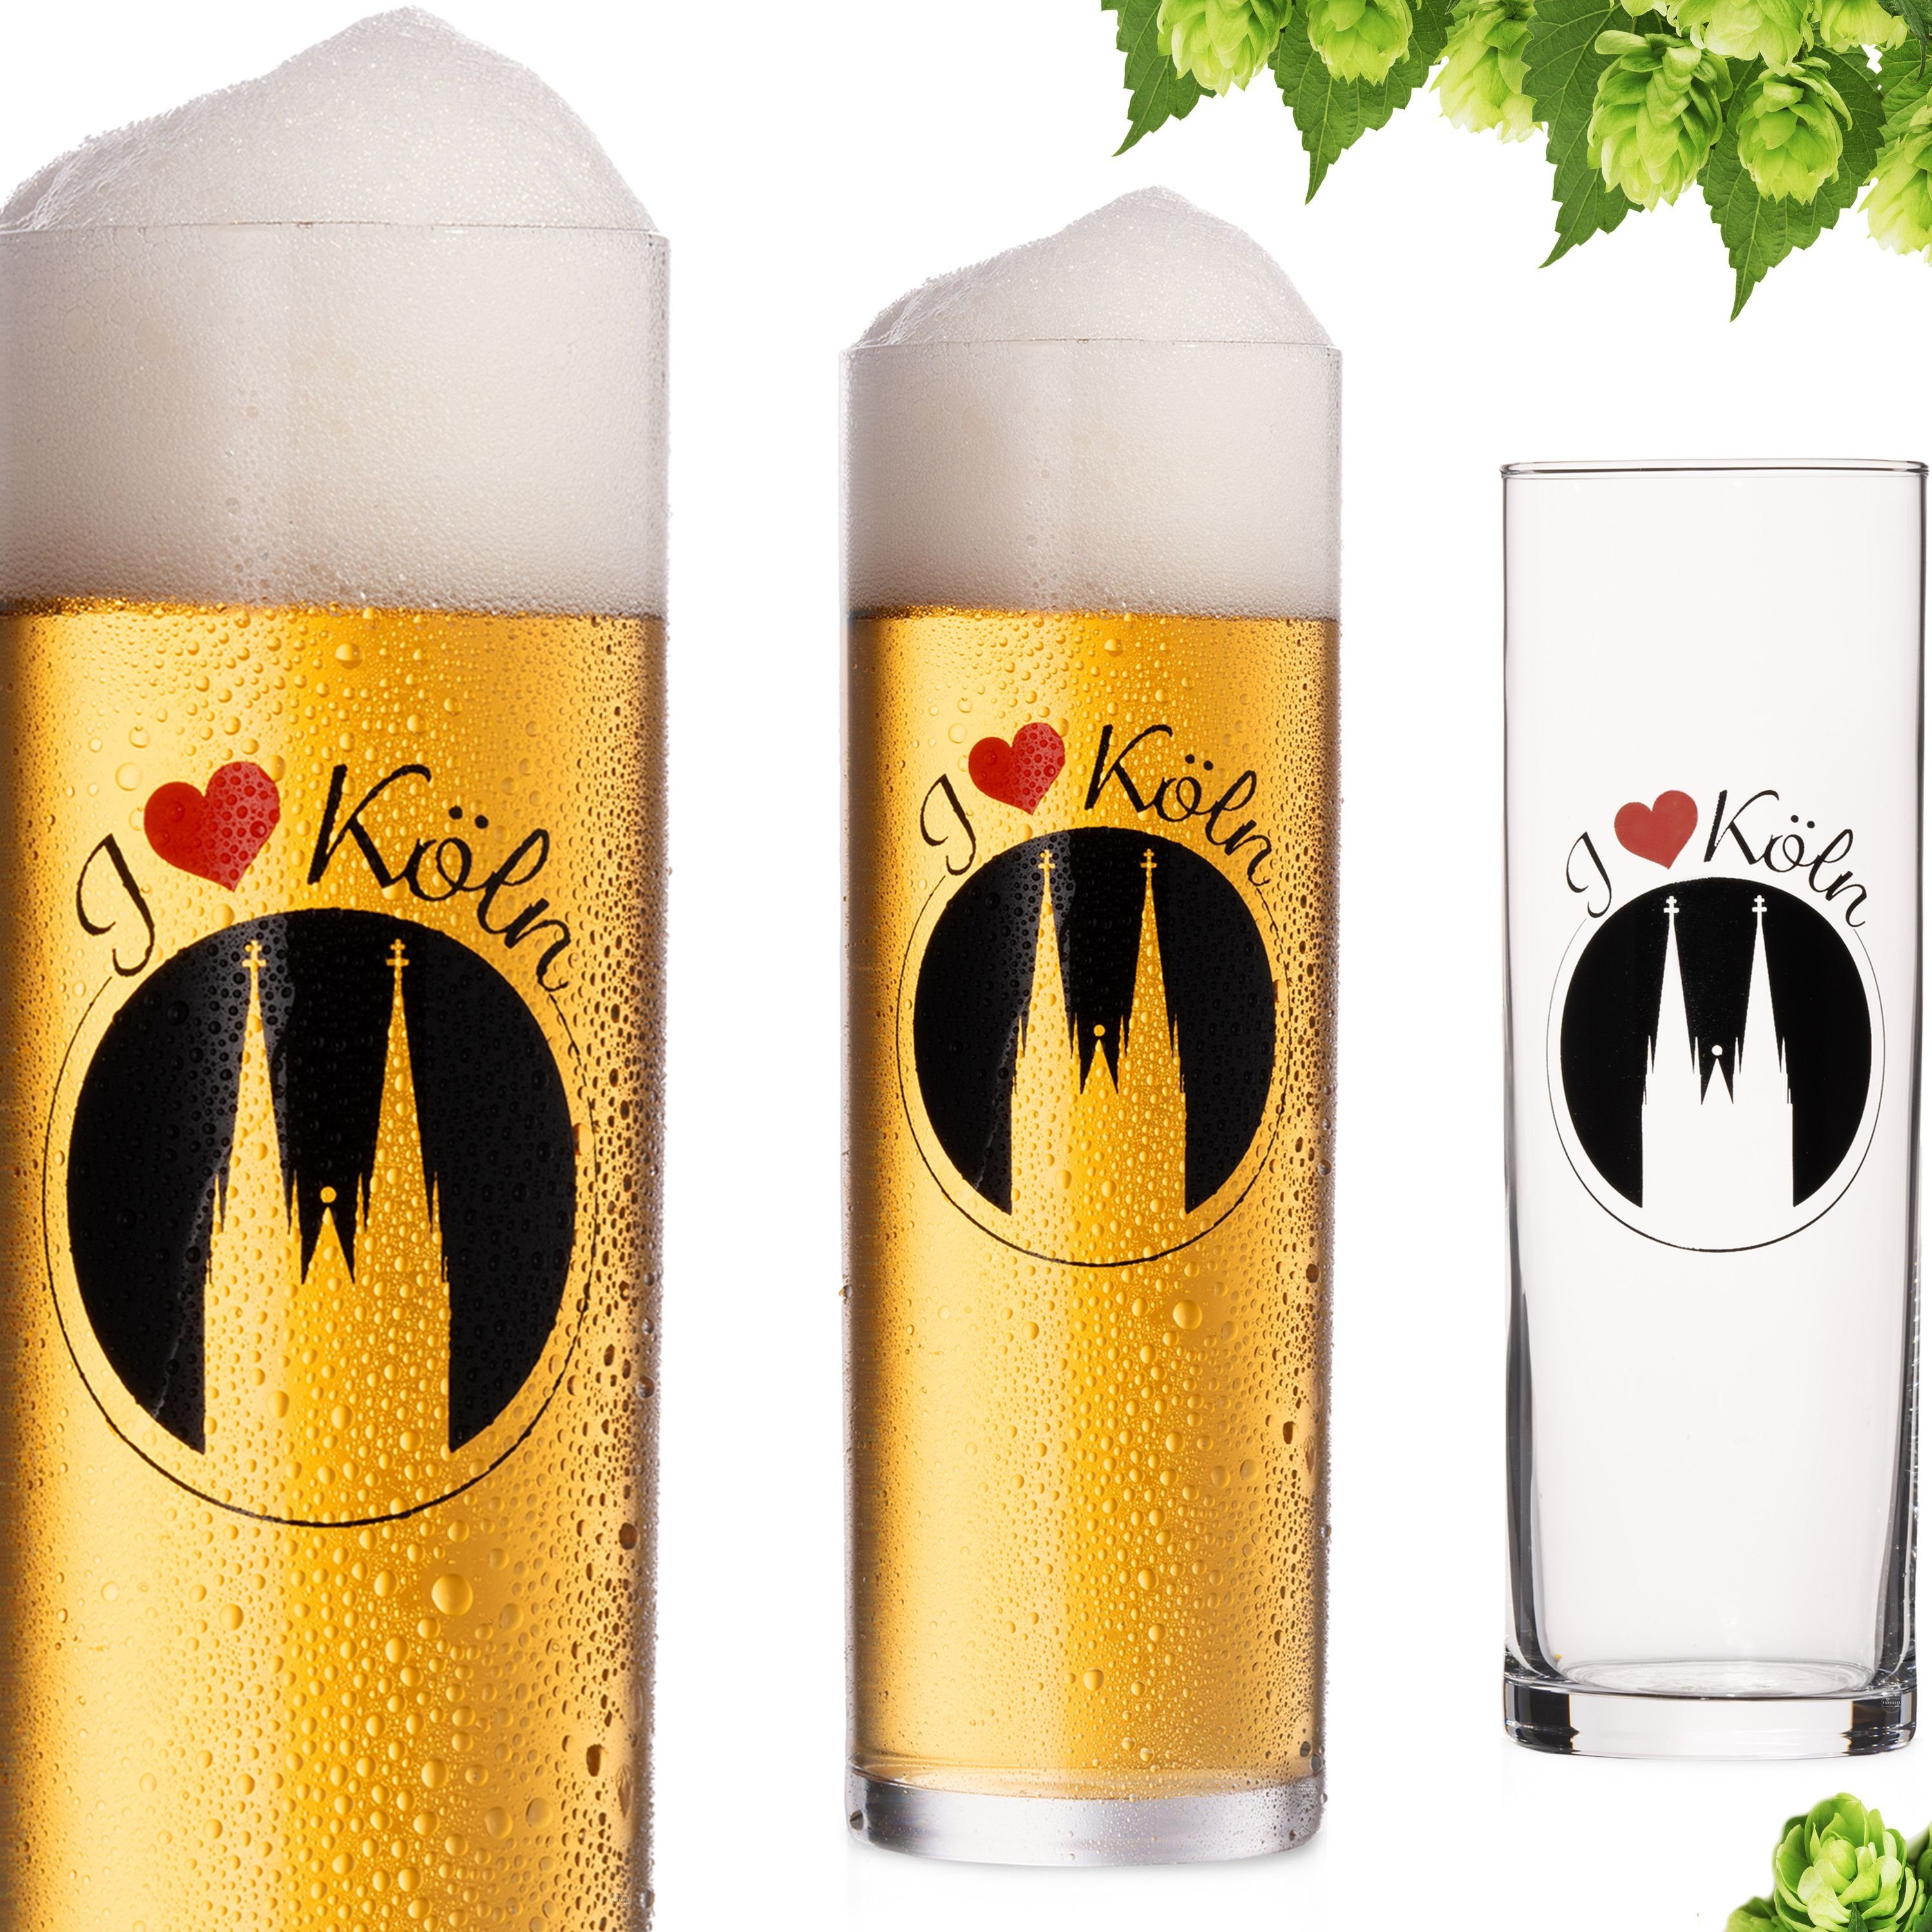 IMPERIAL glass Bierglas Kölschgläser mit Kölner Dom Liebe Motiv 200ml (max. 240ml), Glas, Set 3-Teilig Kölschstangen aus Glas Biergläser Kölngläser